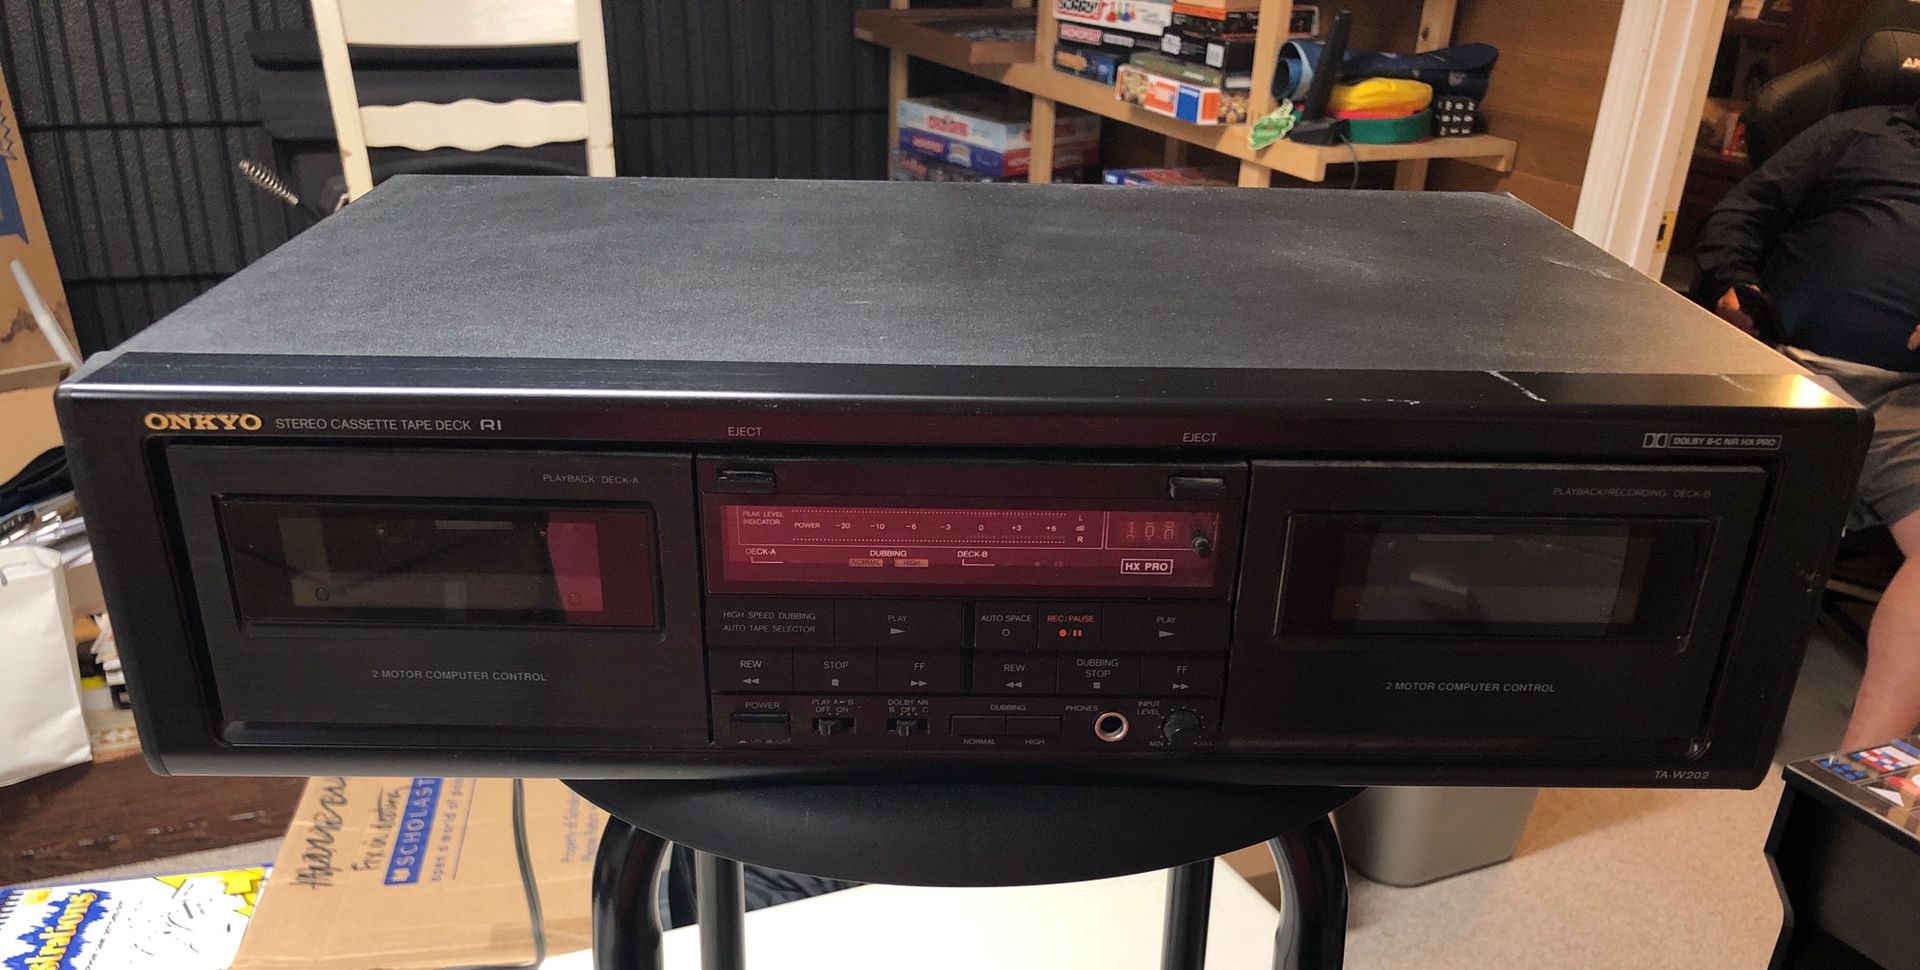 Onkyo tuner, dual cassette deck, Multi disc CD player